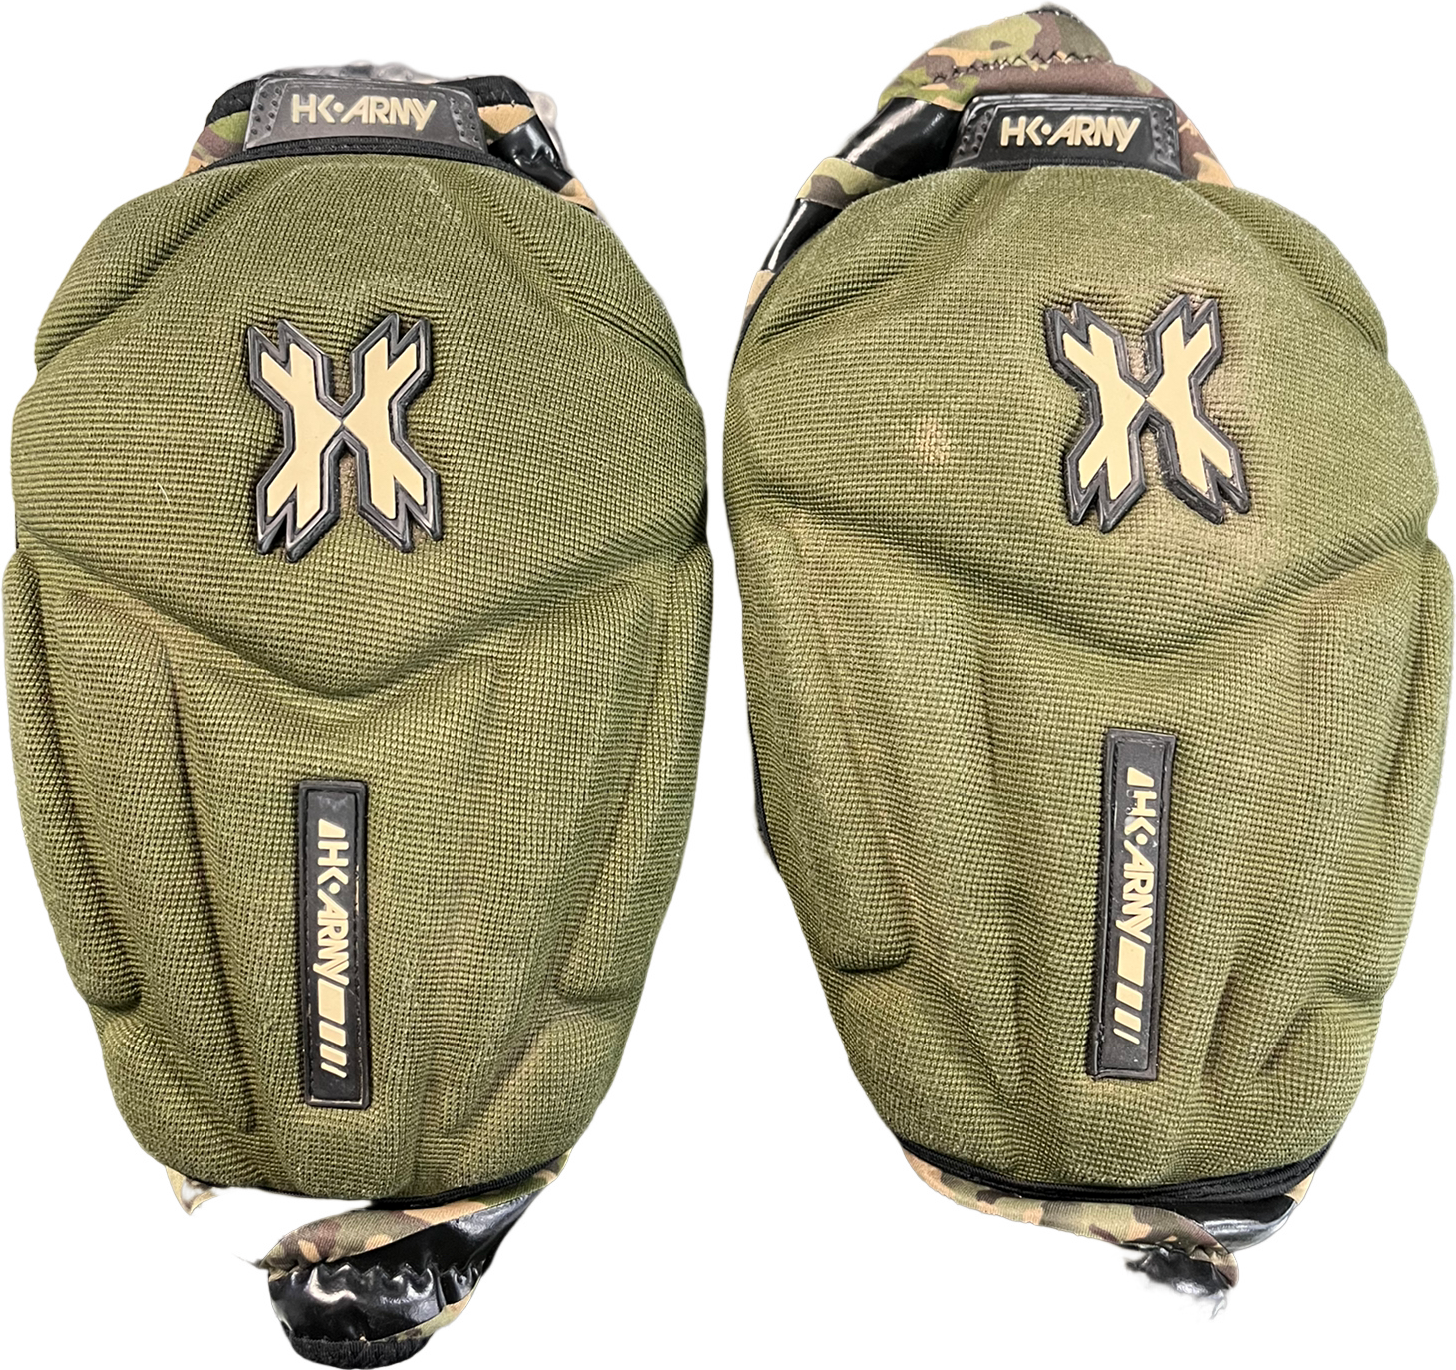 HK Army Knee Pads (Used) - Medium